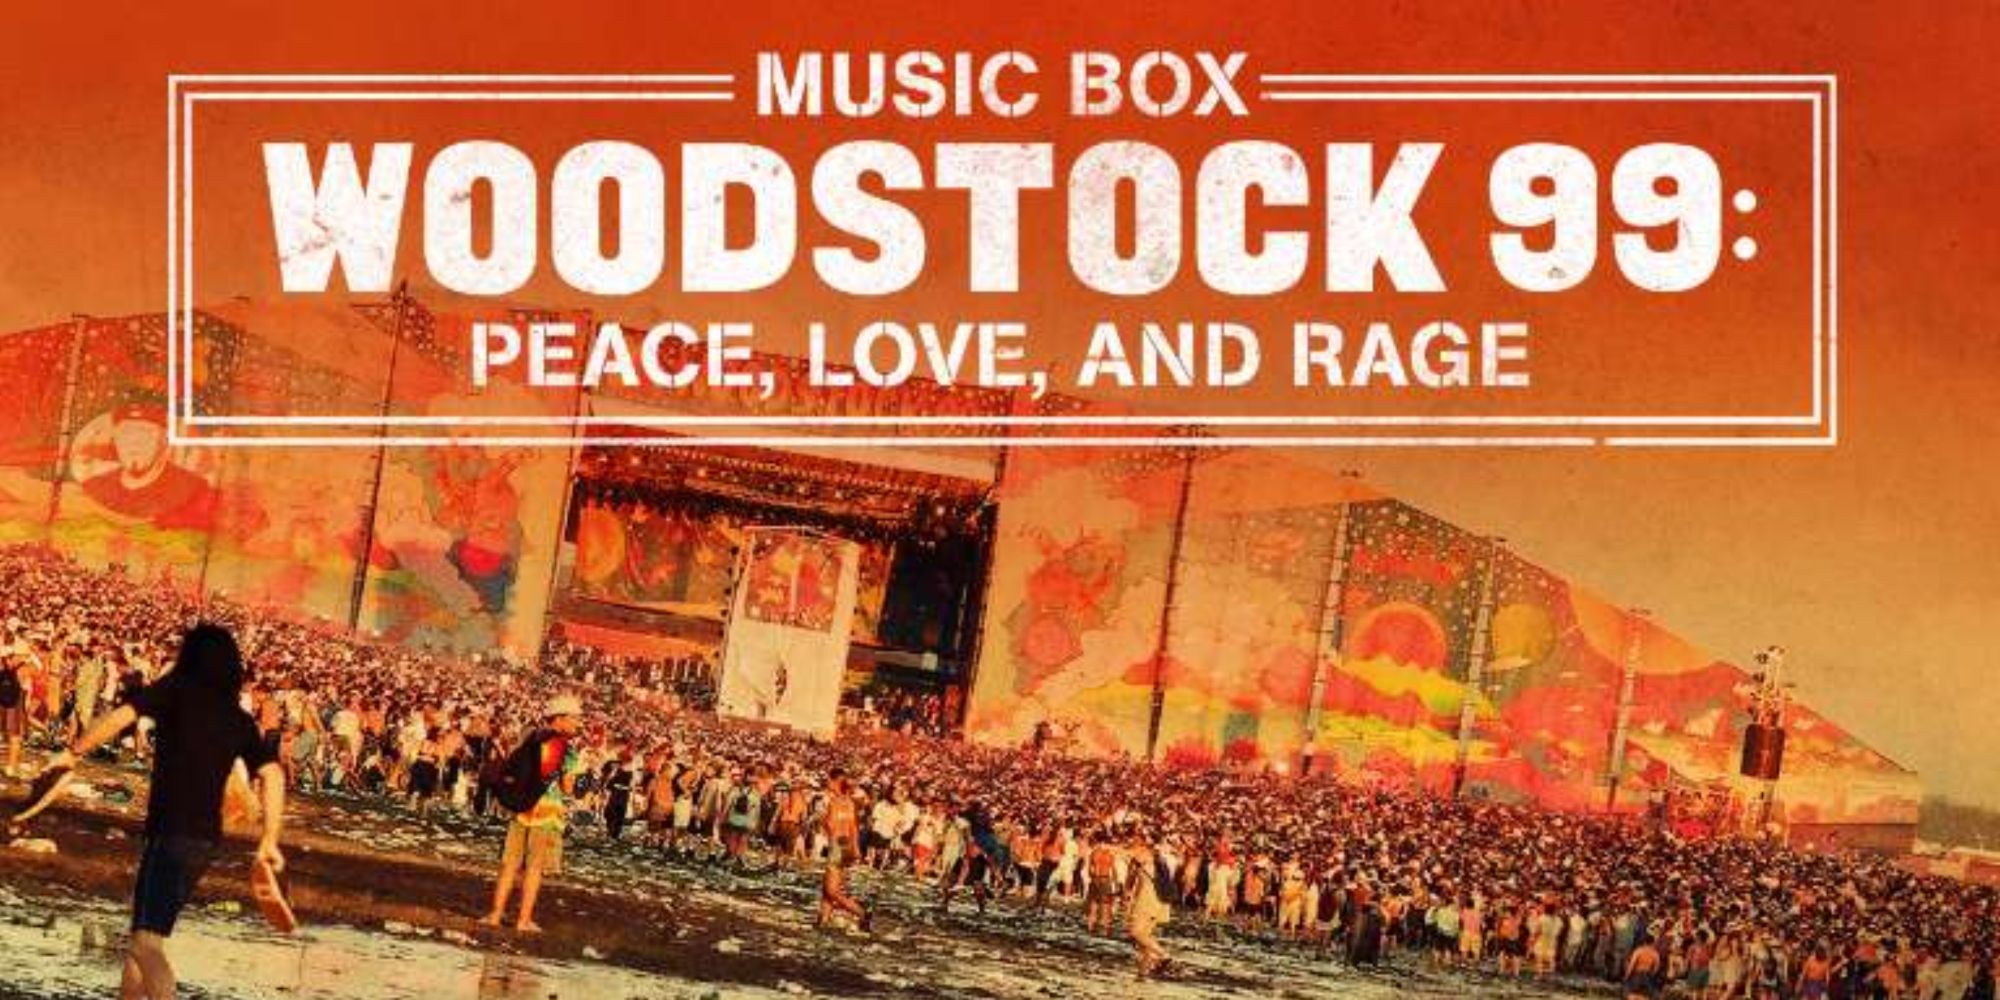 Promo image from Woodstock 99 documentary